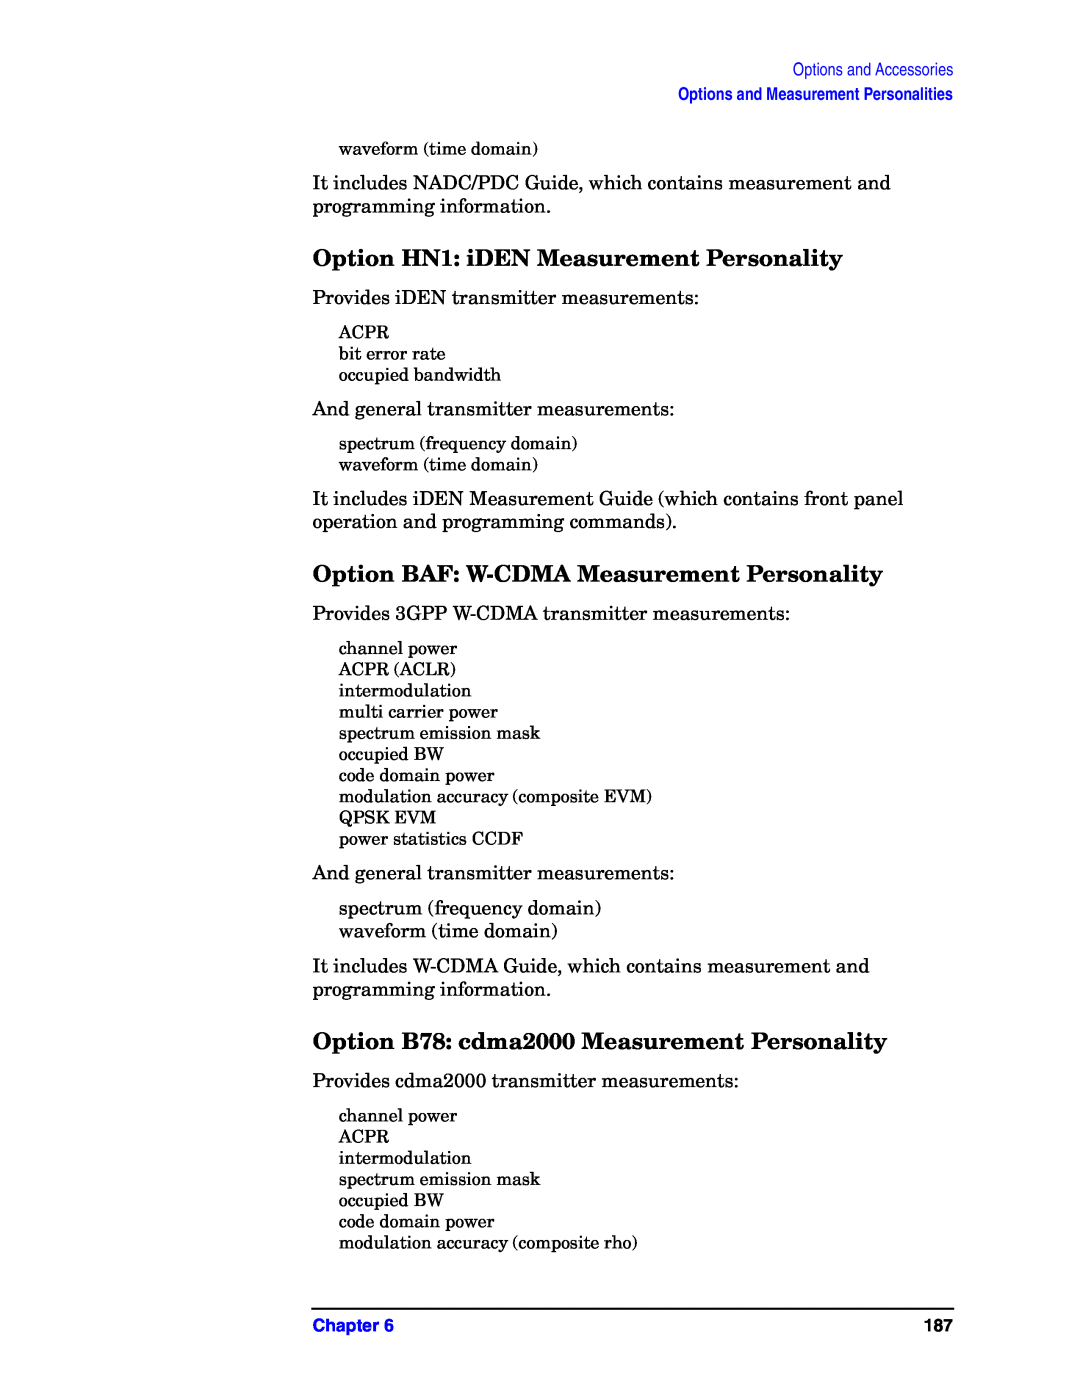 Agilent Technologies E4406A manual Option HN1: iDEN Measurement Personality, Option BAF: W-CDMAMeasurement Personality 